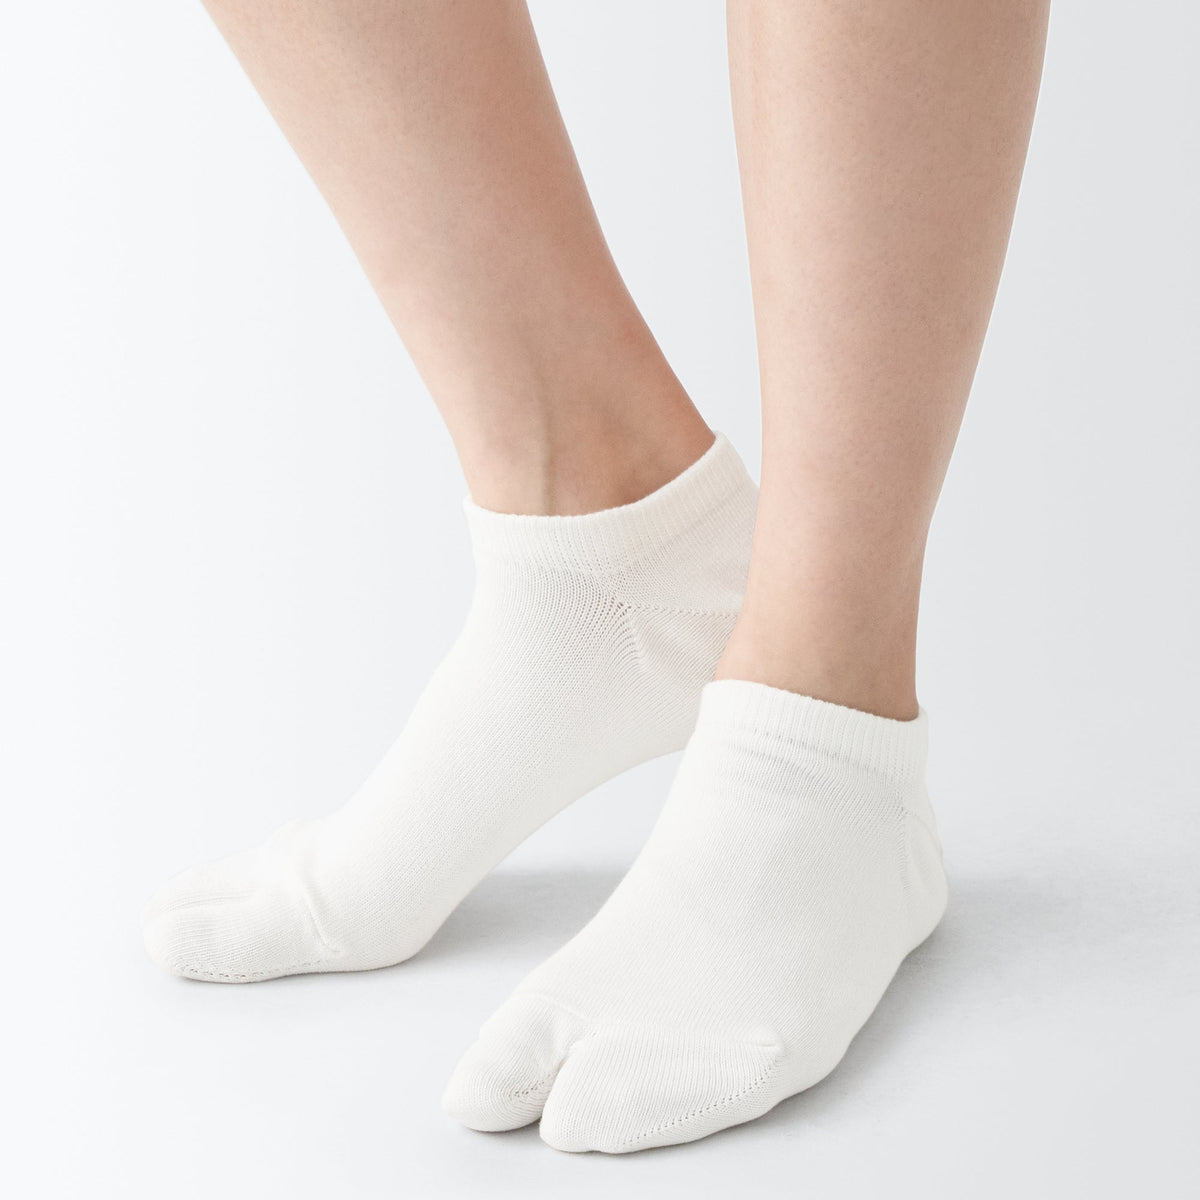 Tabi Socks- Comfortable Soft Black/Gray/Green Stripes Ankle-High Toe Socks